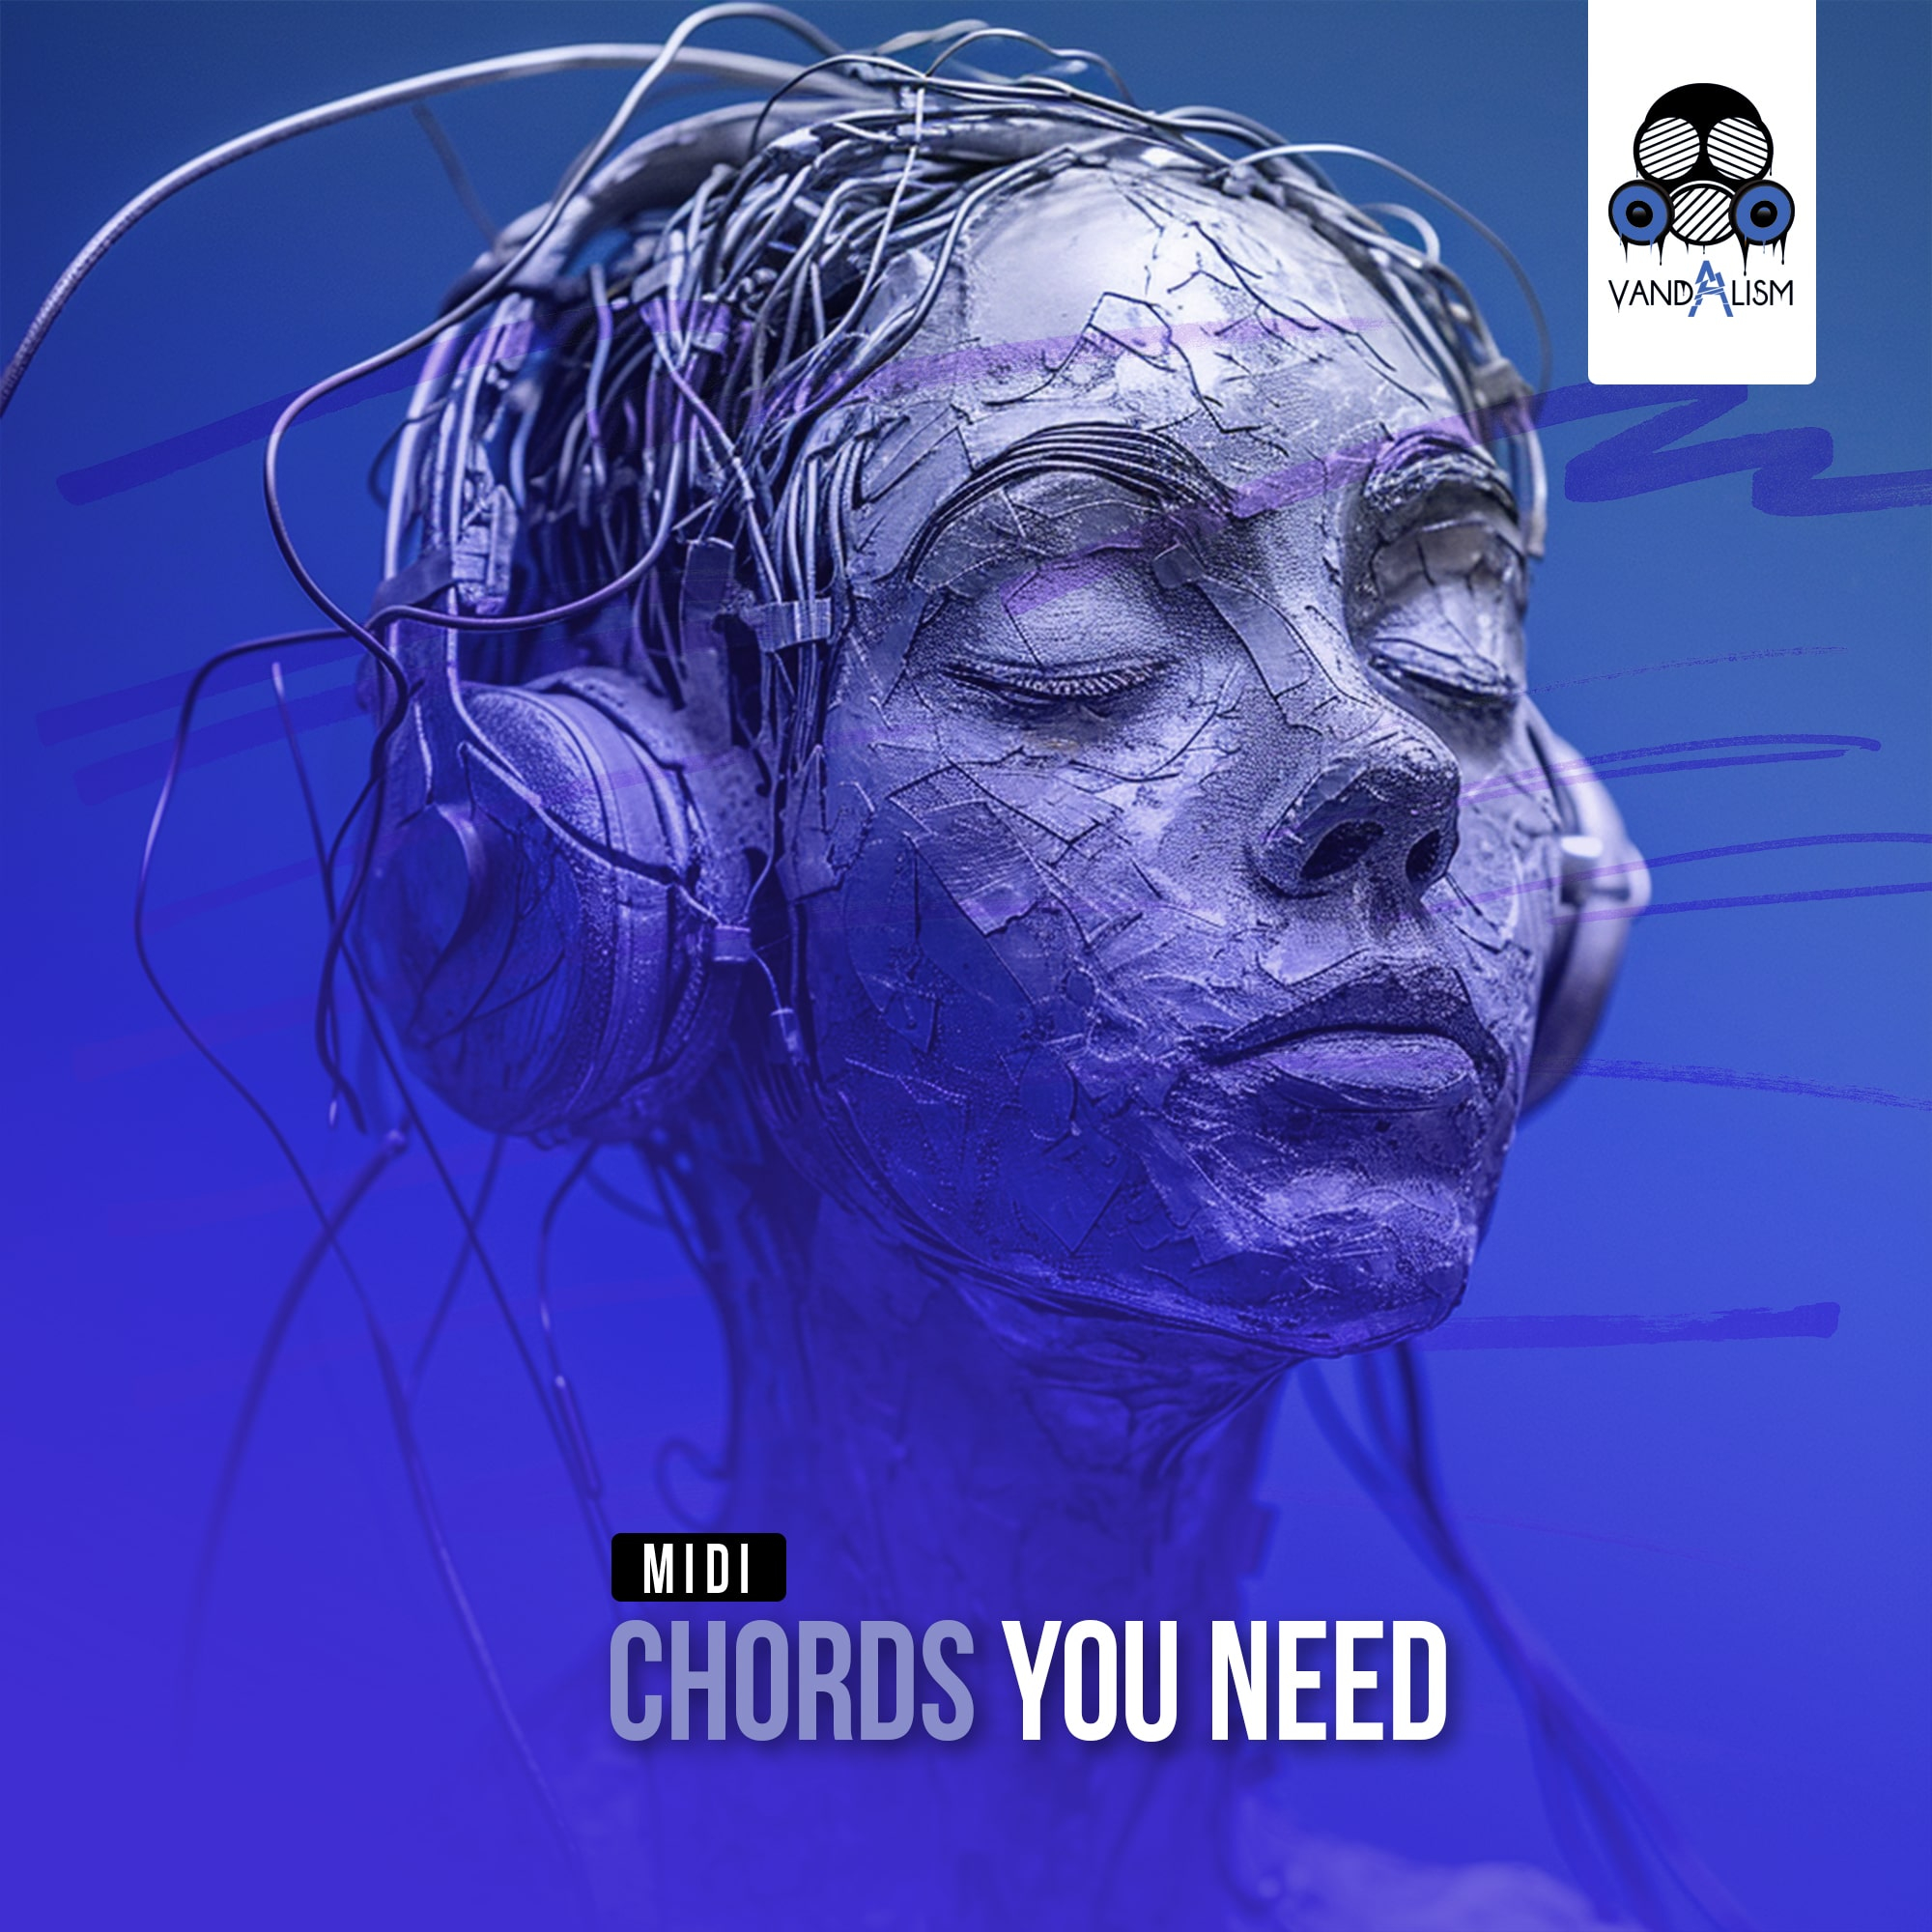 MIDI: Chords You need